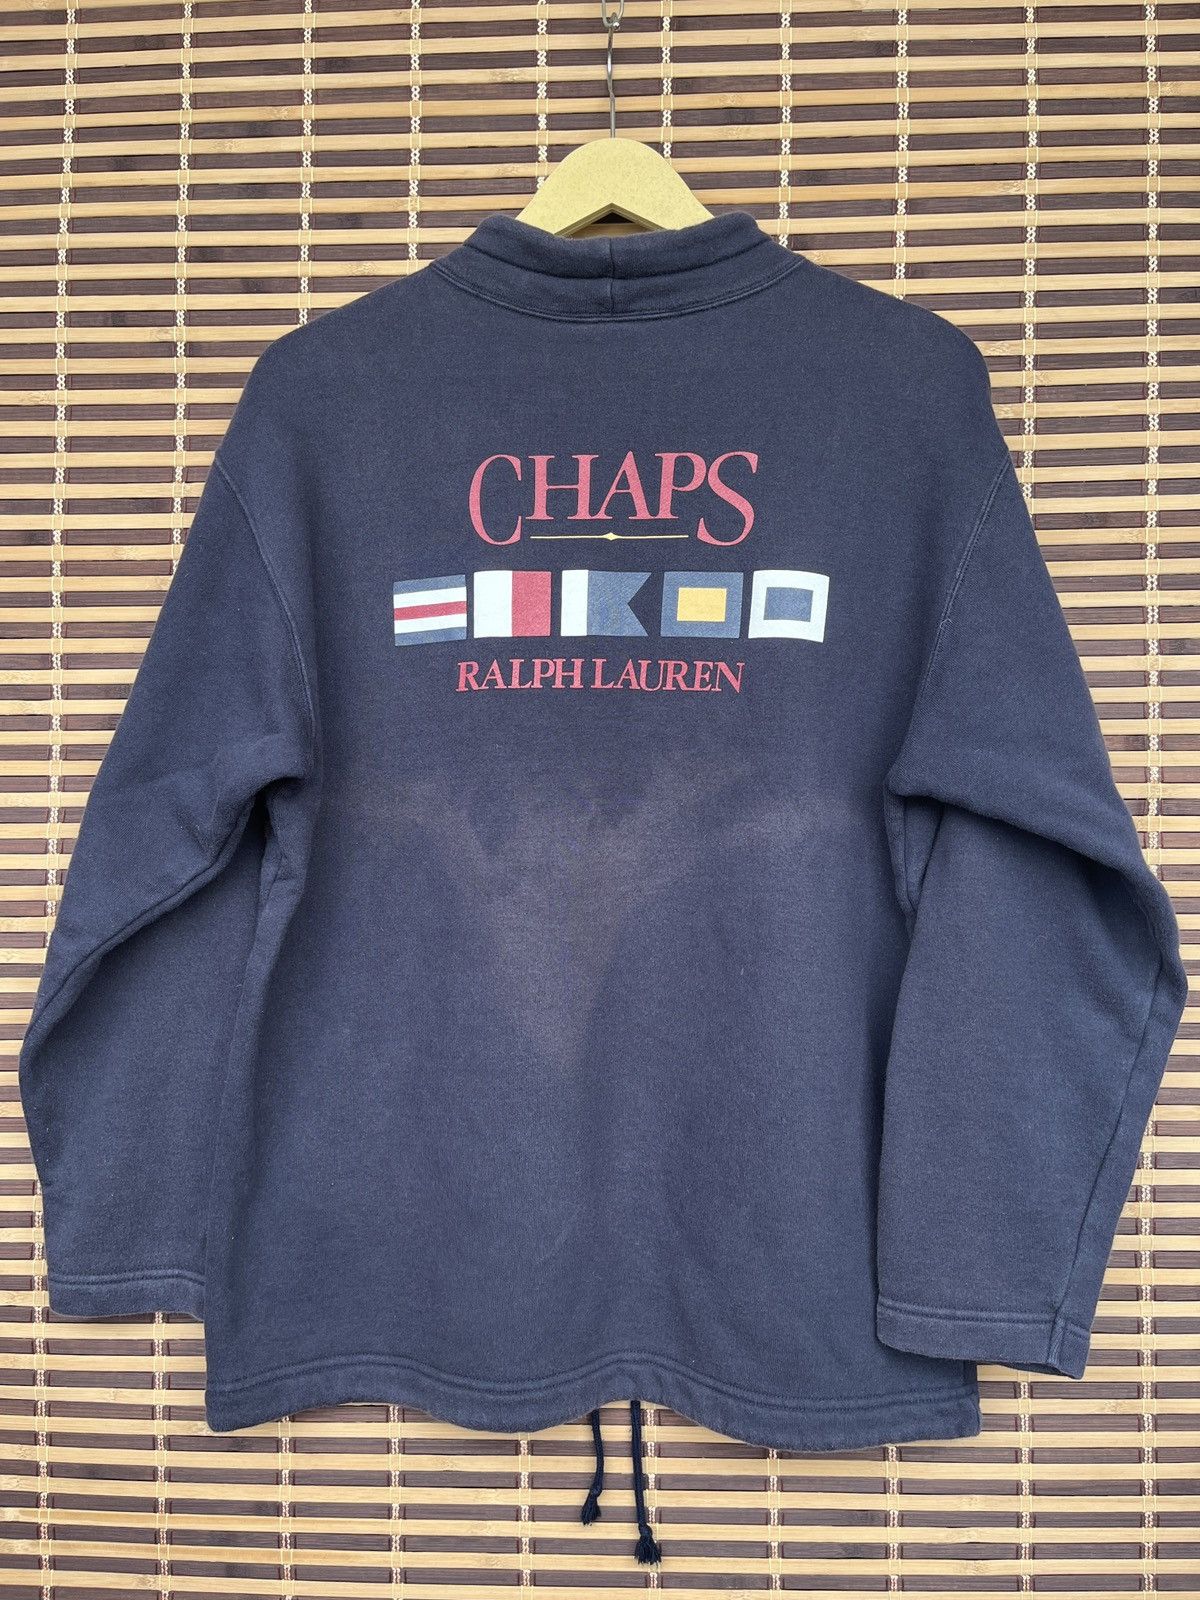 Vintage 90s Pullover Chaps Ralph Lauren Drawstring Sweater - 2